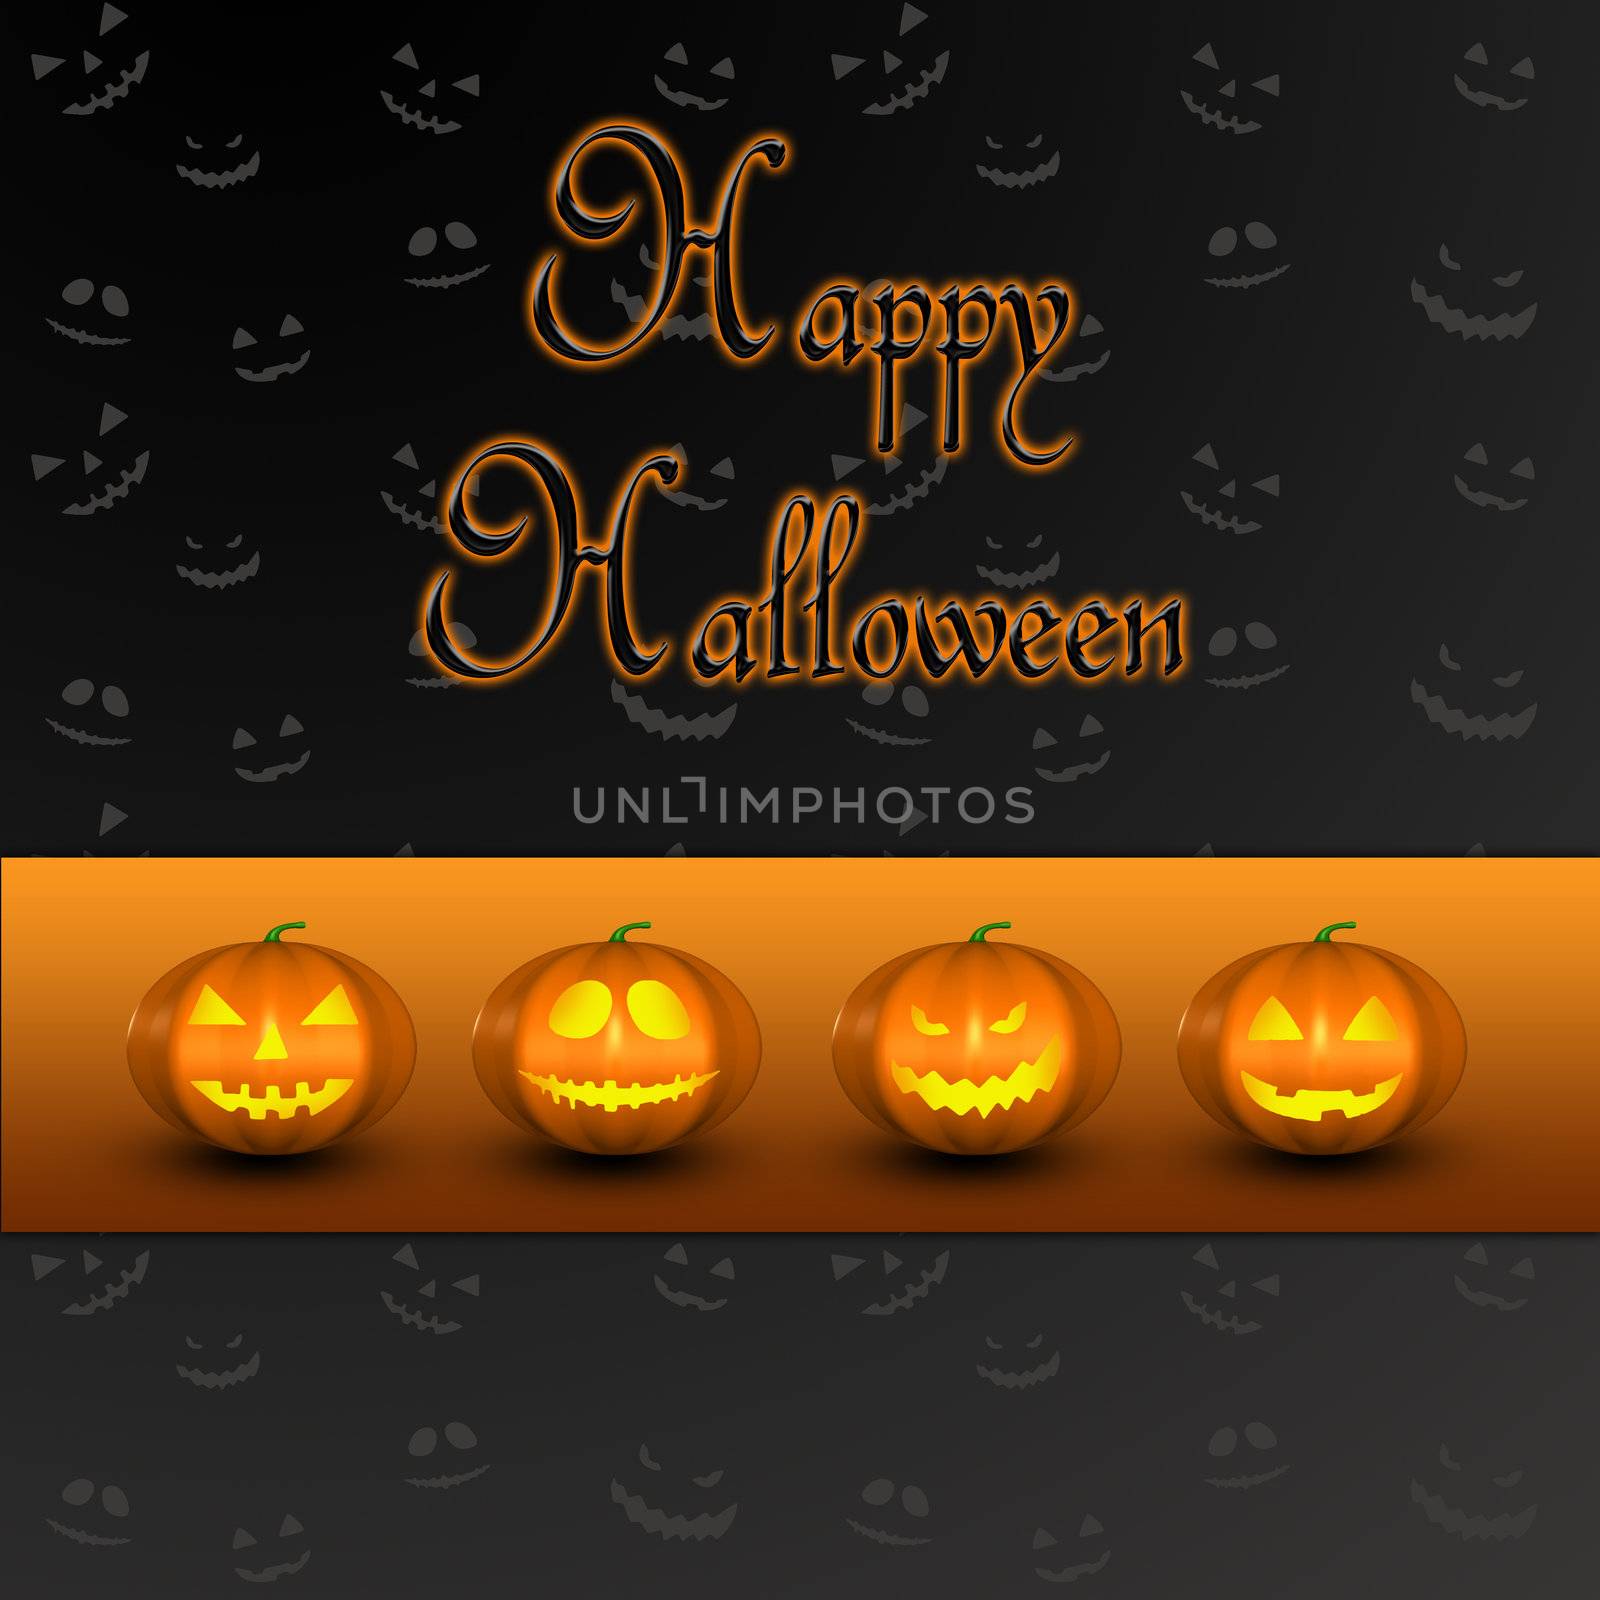 A Halloween illustration: 4 different Jack-o-Lantern pumpkins with an orange border on a black Halloween pattern background.